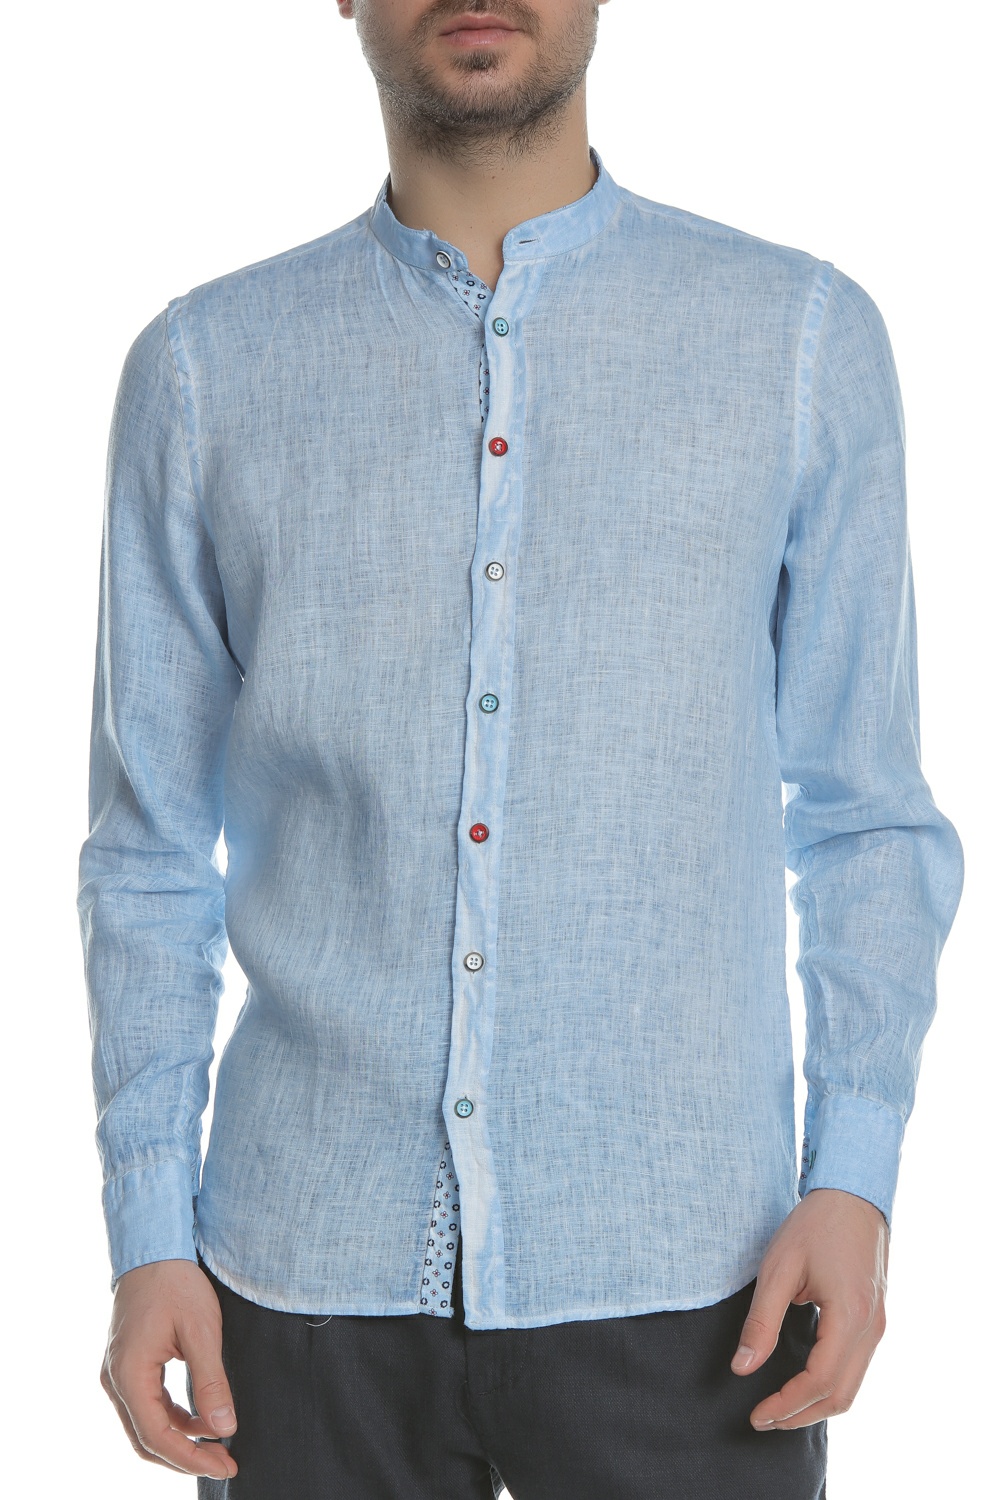 SSEINSE - Ανδρικό μακρυμάνικο πουκάμισο λινό SSEINSE γαλάζιο Ανδρικά/Ρούχα/Πουκάμισα/Μακρυμάνικα